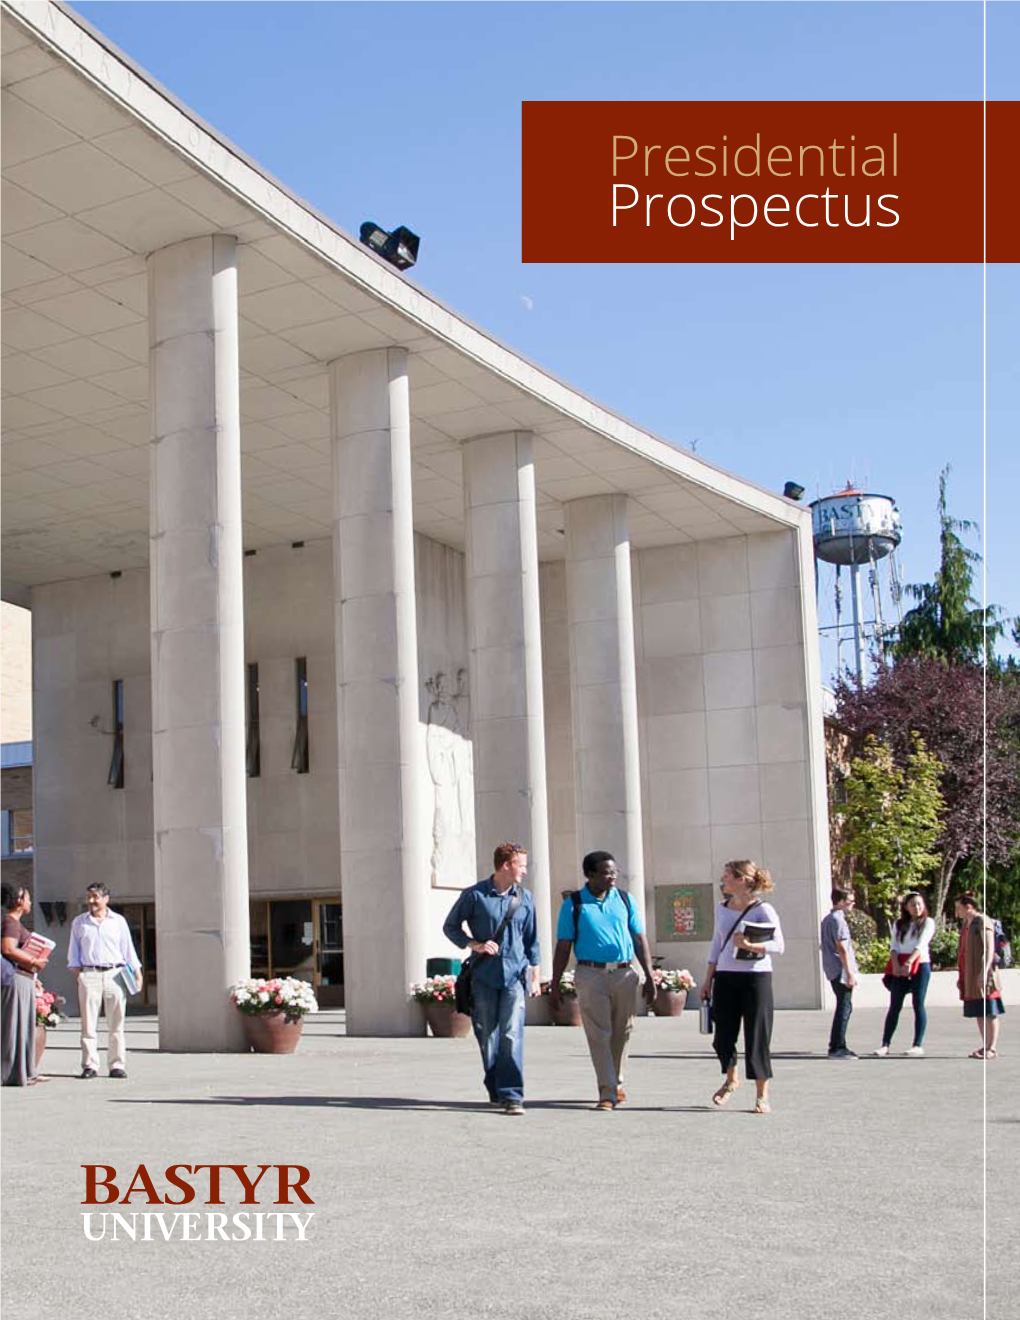 Prospectus Bastyr University | Presidential Prospectus